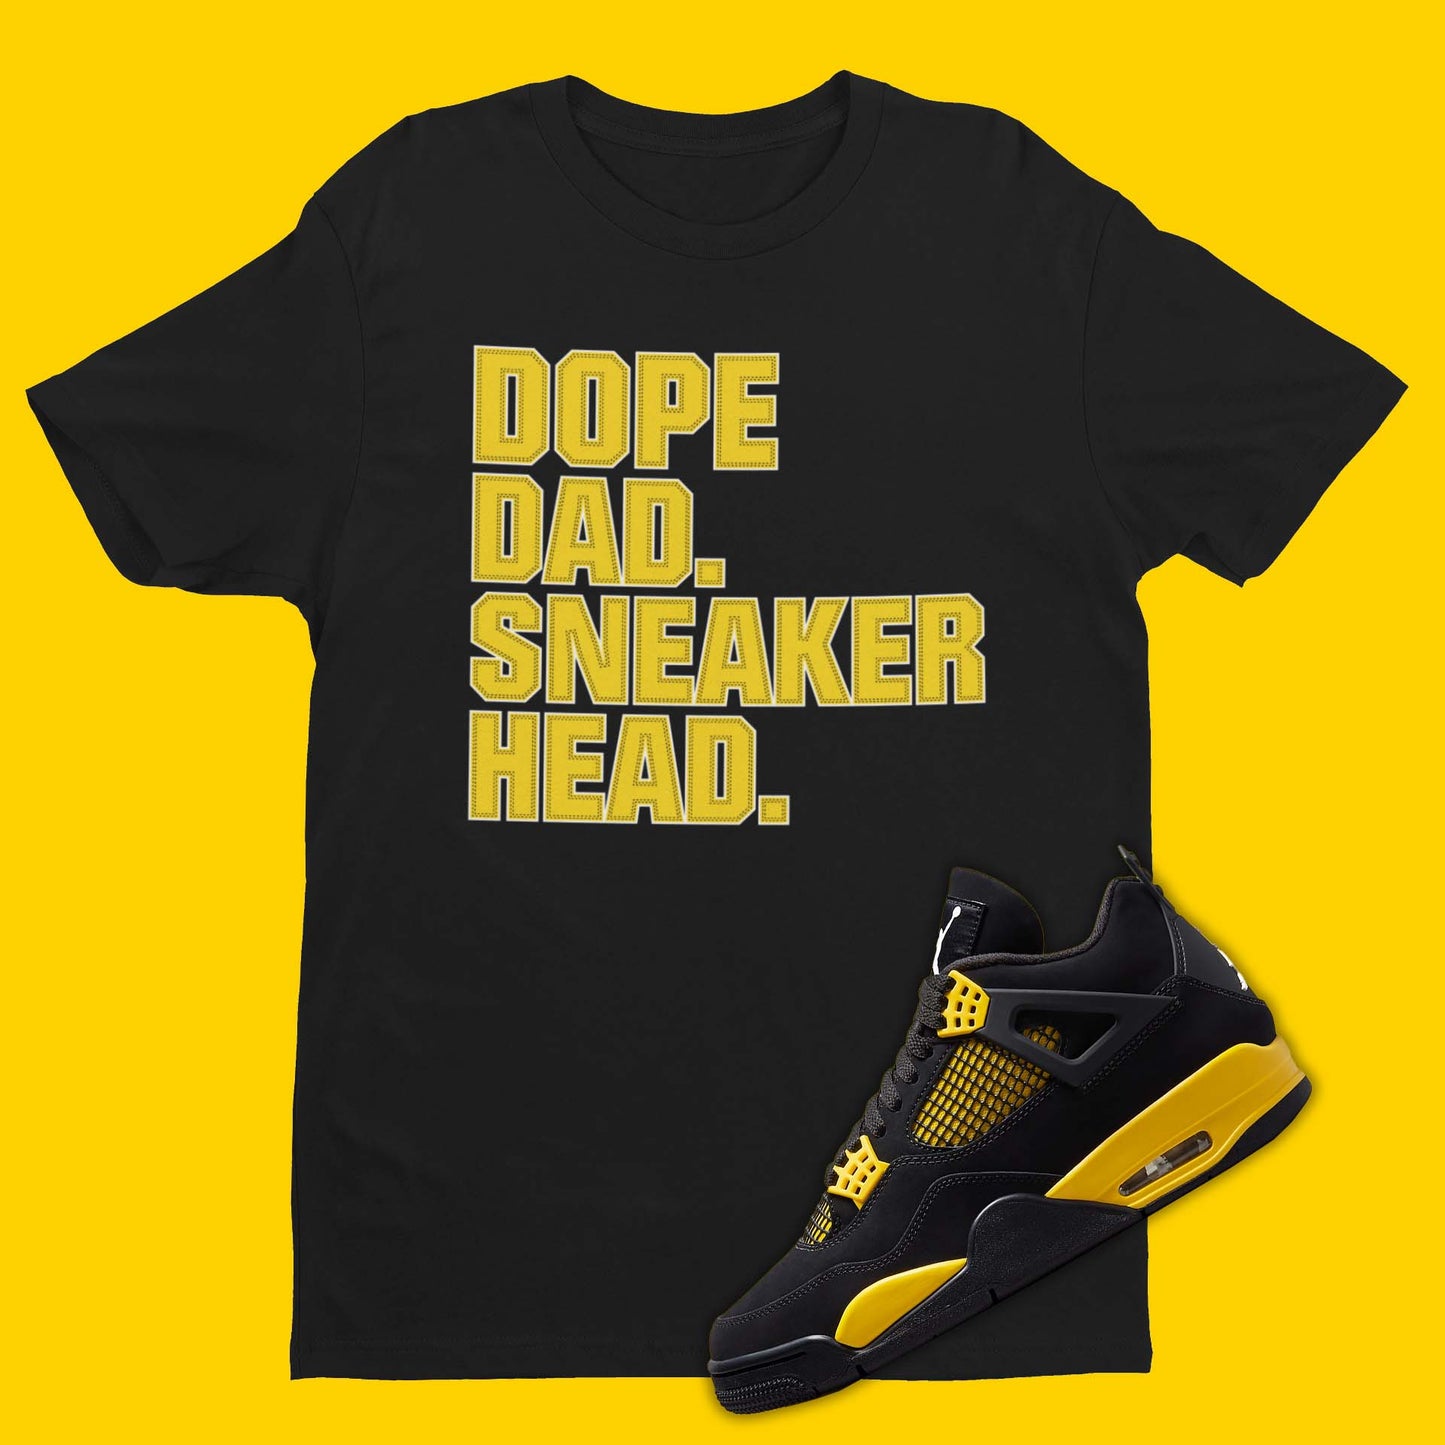 Black crew neck t-shirt with 'Dope Das Sneakerhead' design inspired by Air Jordan 4 Thunder sneakers.